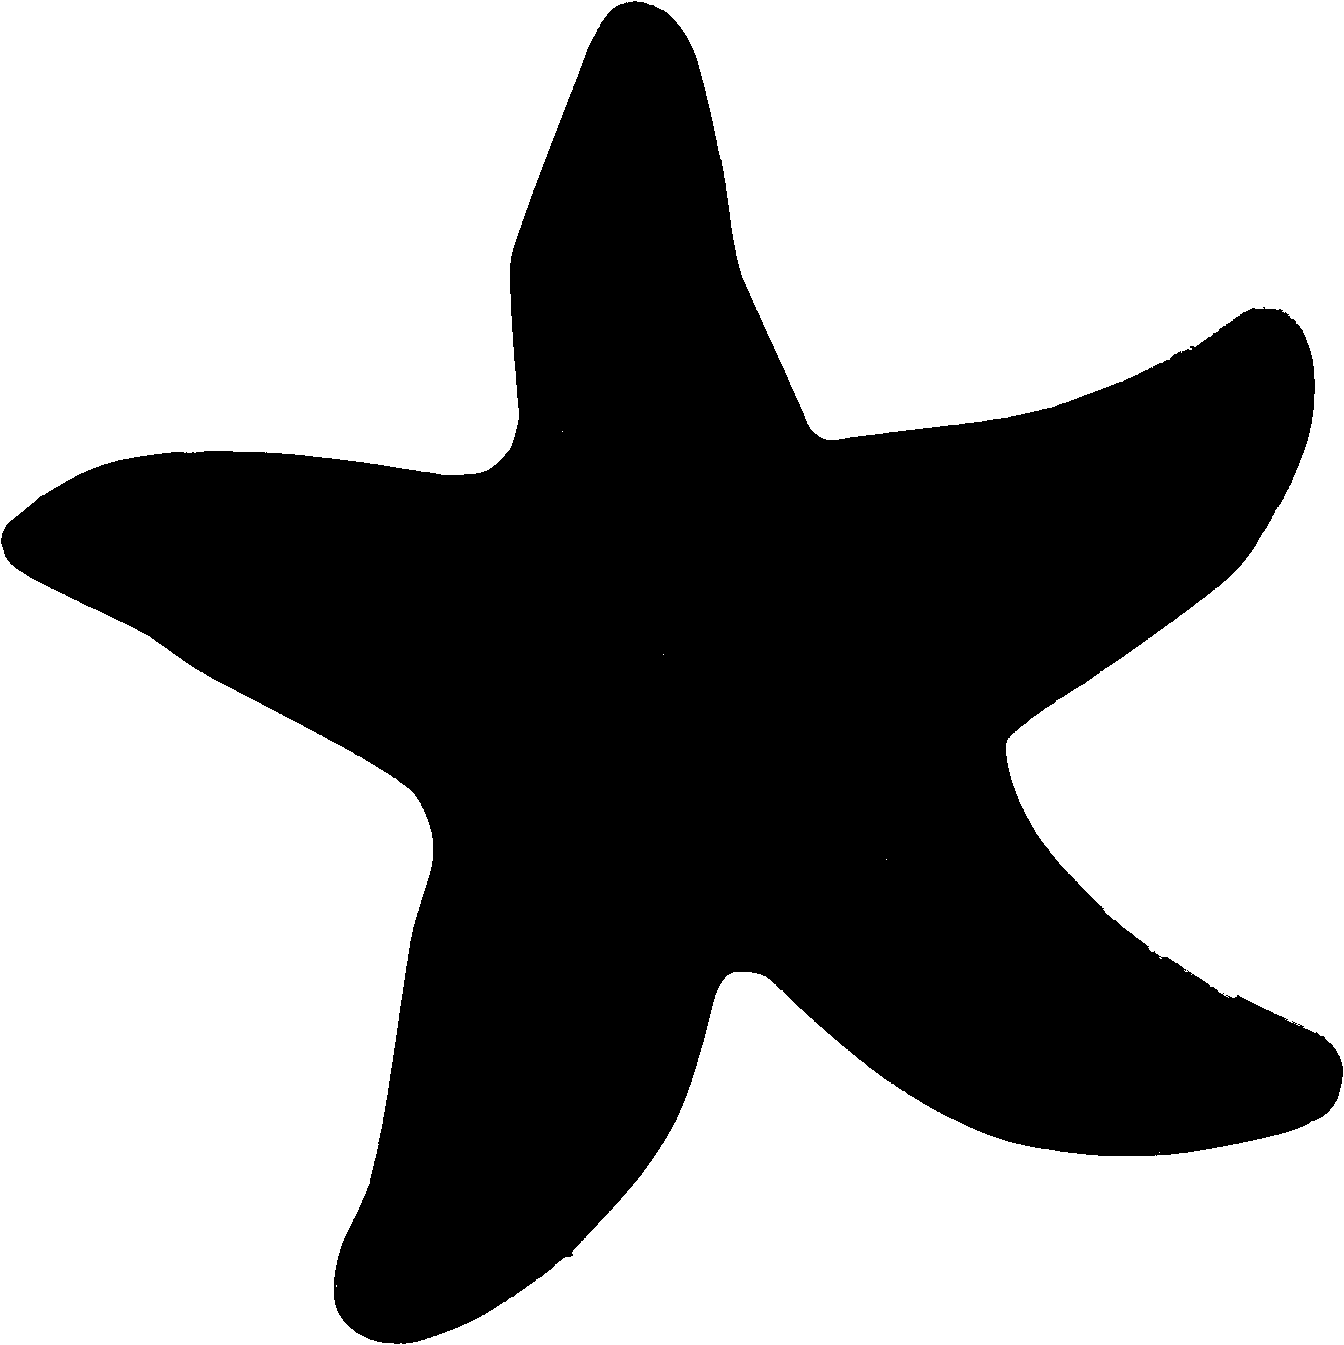 Starfish Clip Art | Clipart Panda - Free Clipart Images